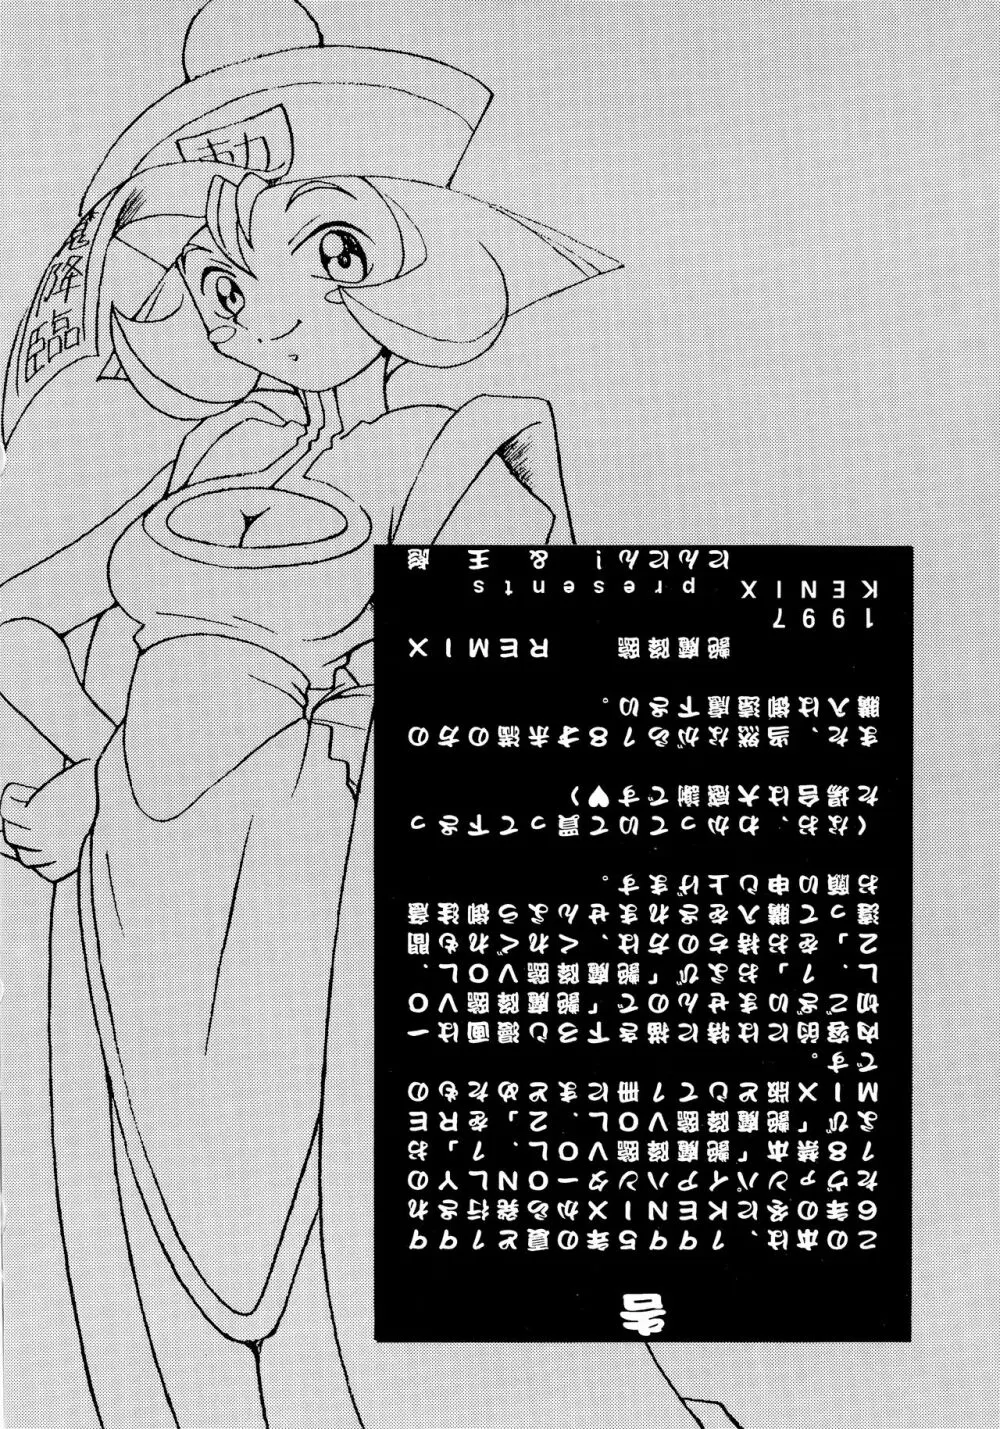 艶魔降臨 REMIX - page2